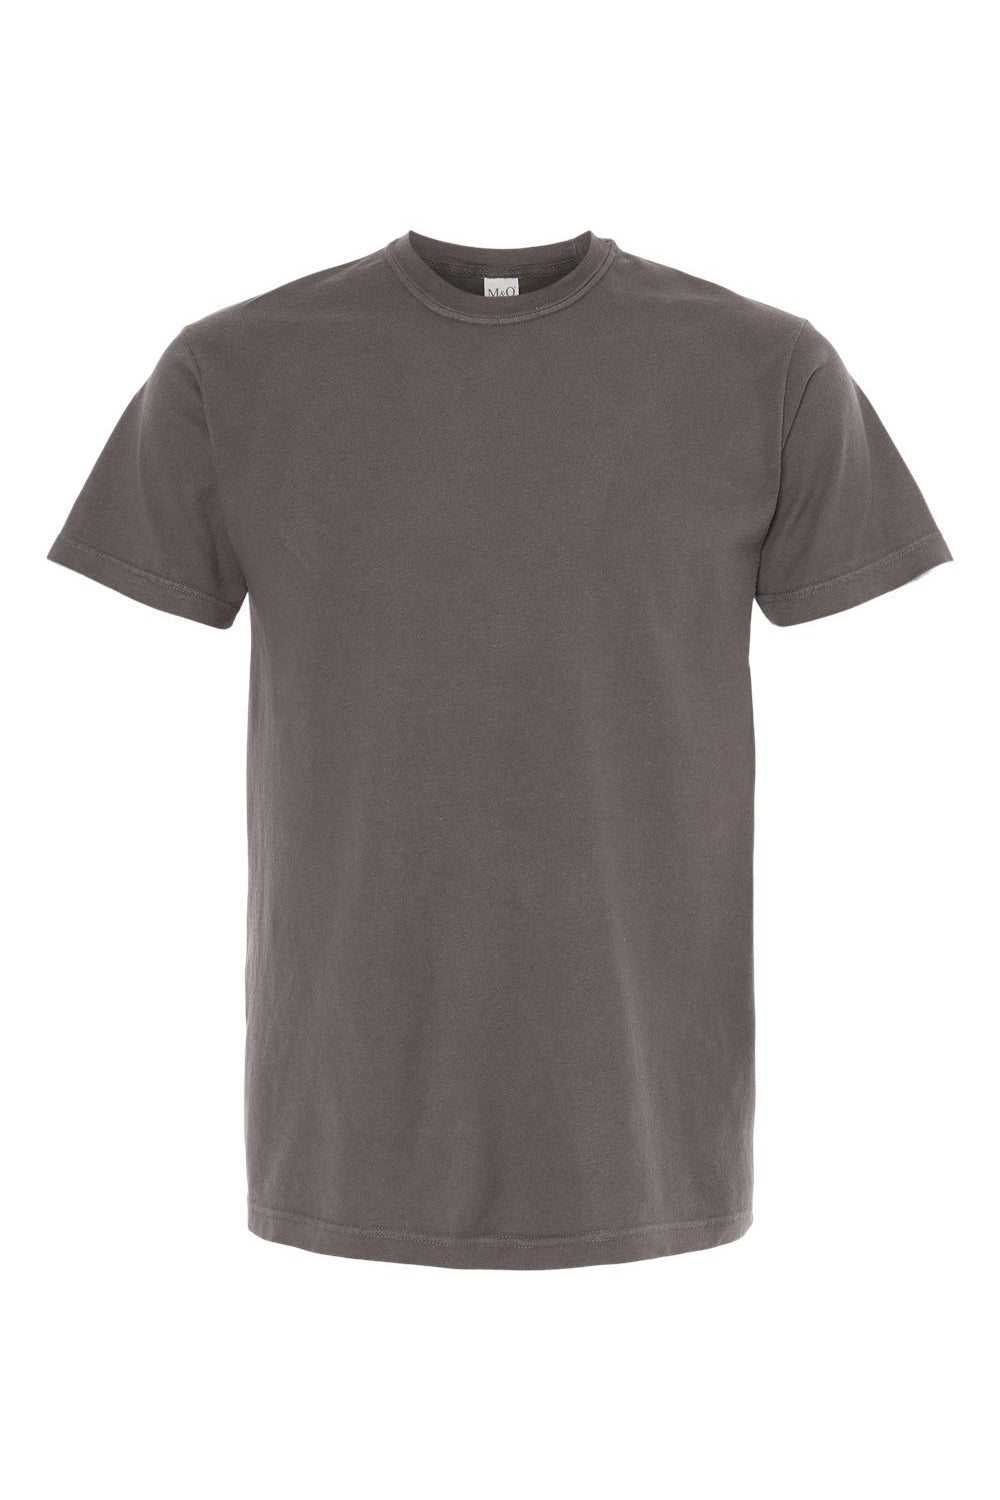 M&O 6500M Mens Vintage Garment Dyed Short Sleeve Crewneck T-Shirt Pepper Grey Flat Front